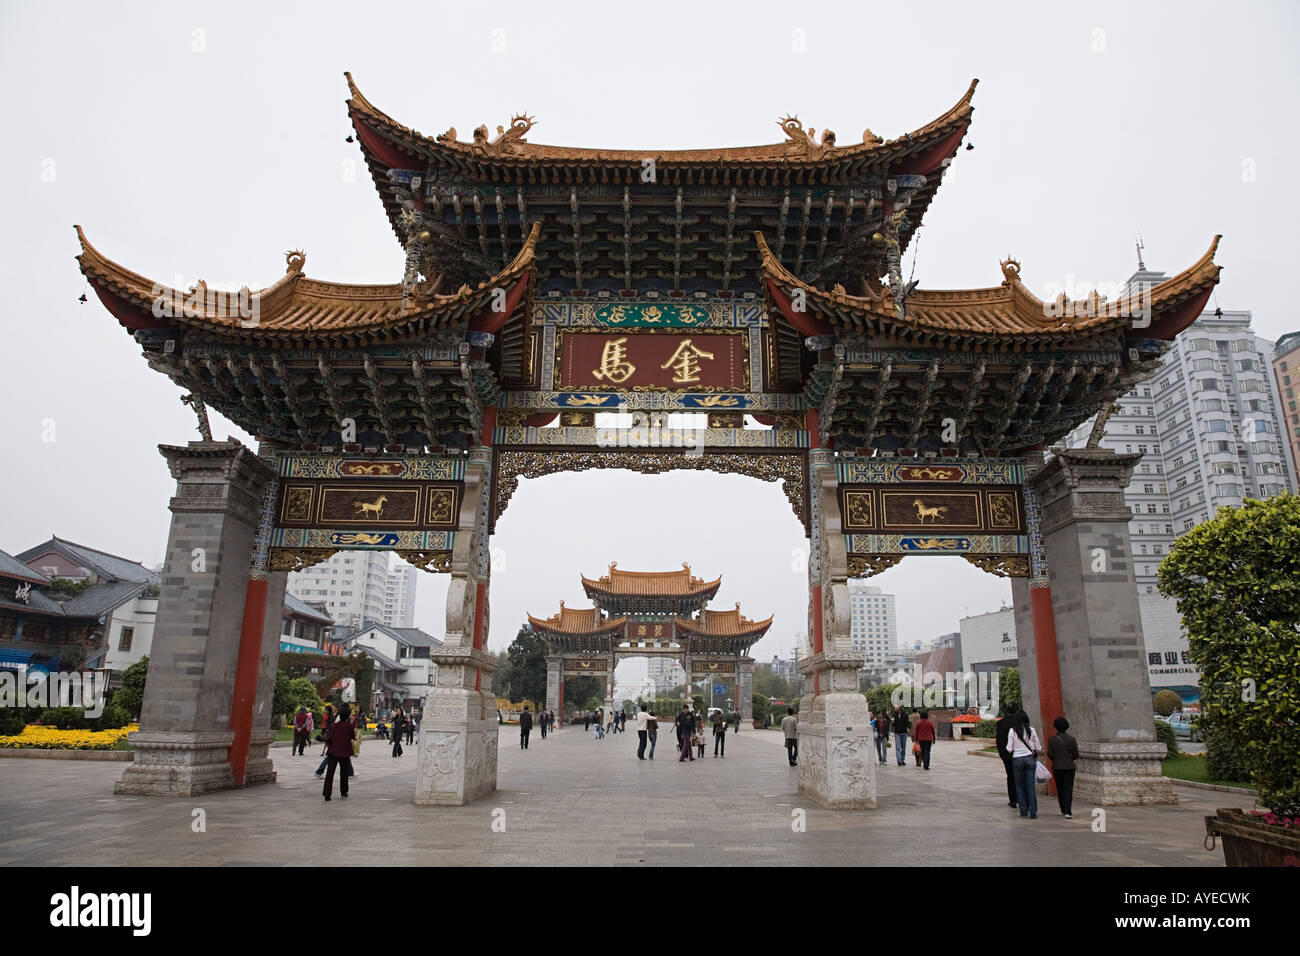 Arch in kunming Stock Photo